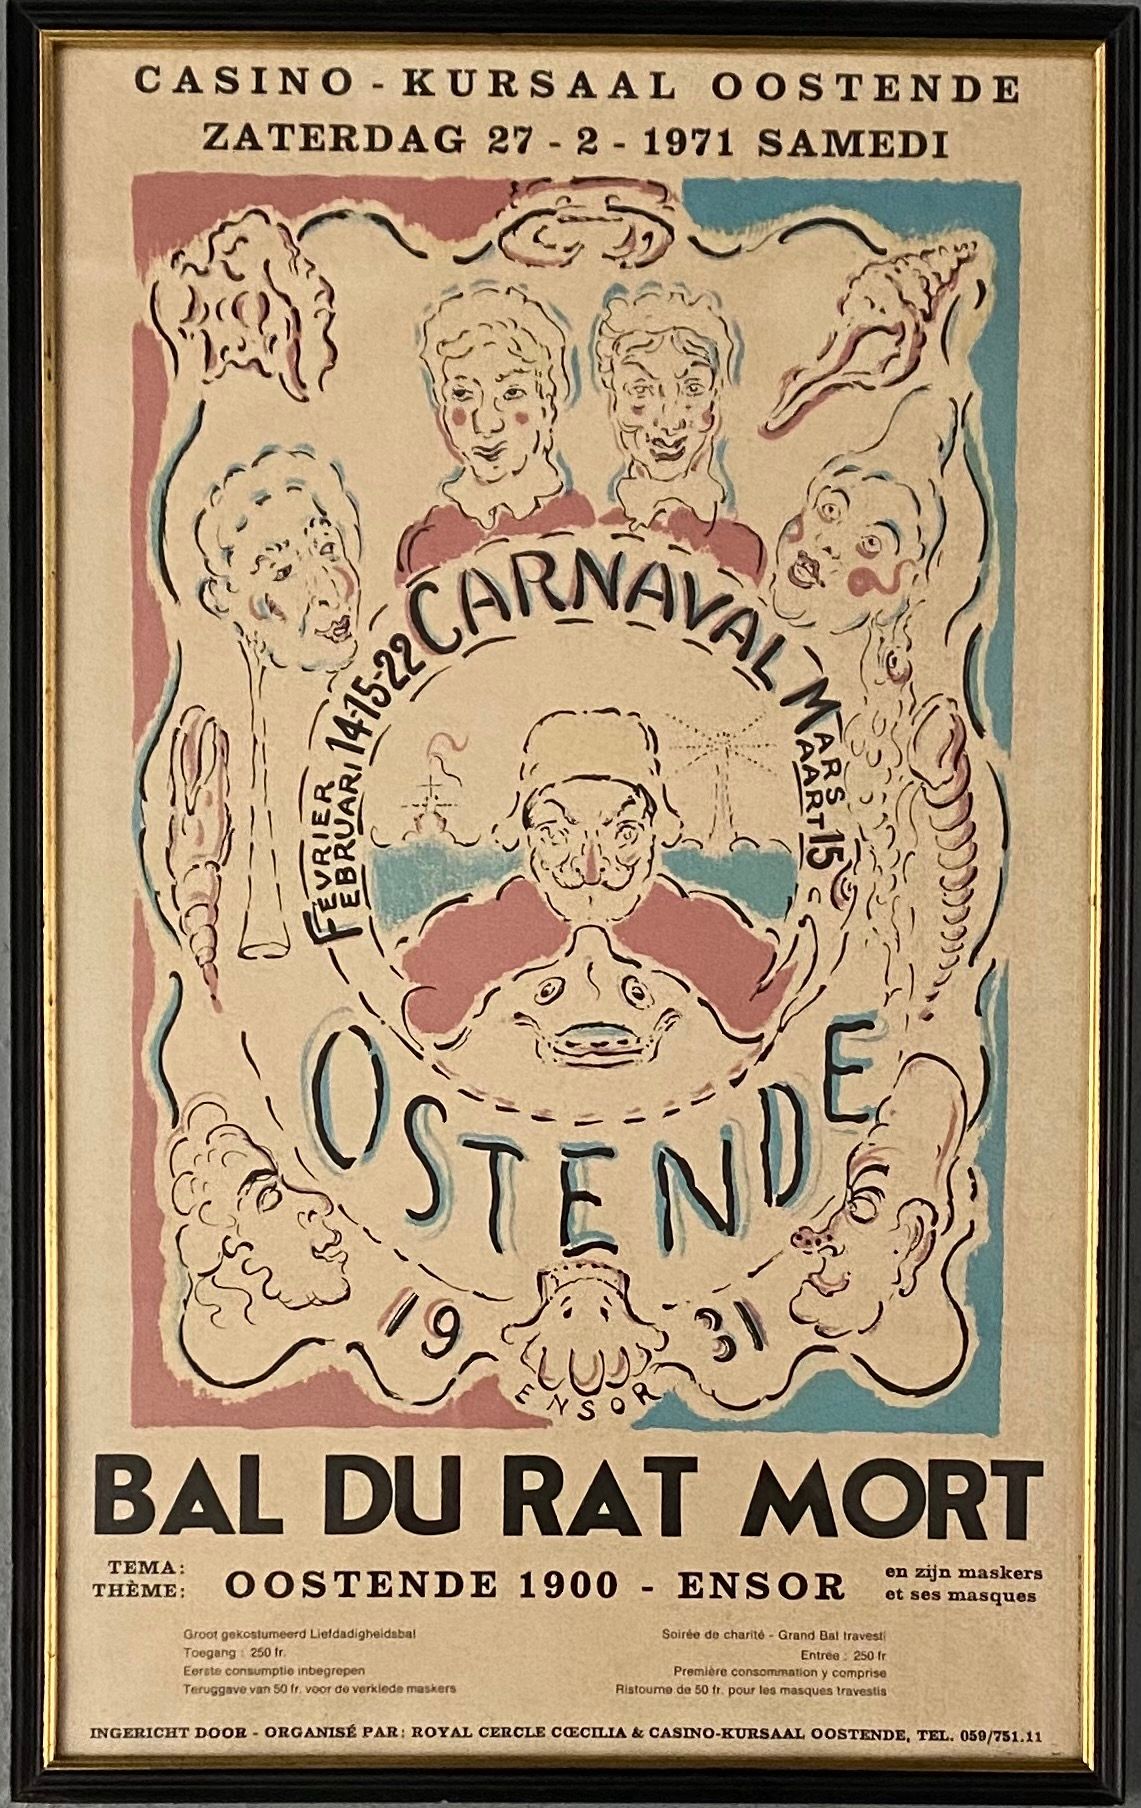 ENSOR J 
Poster from the exhibition 'Bal du rat mort'. 55,5 x 34 cm.